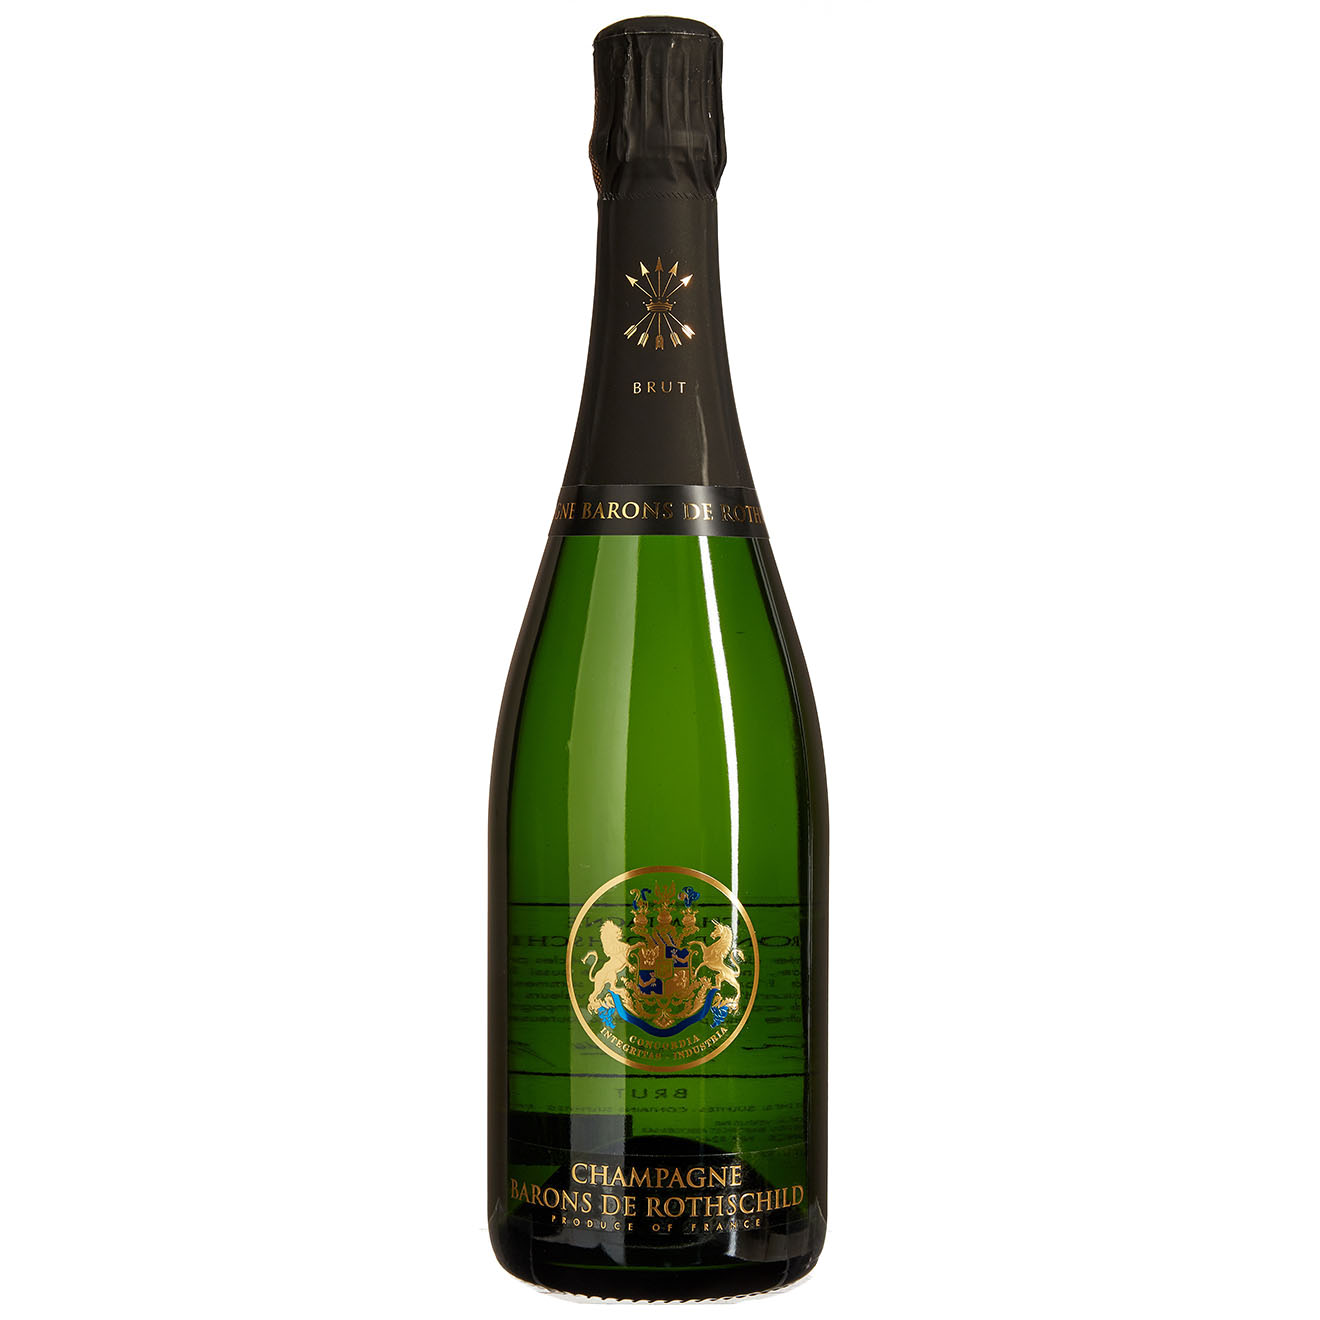 1 Champagne Brut Barons de Rothschild 75cl